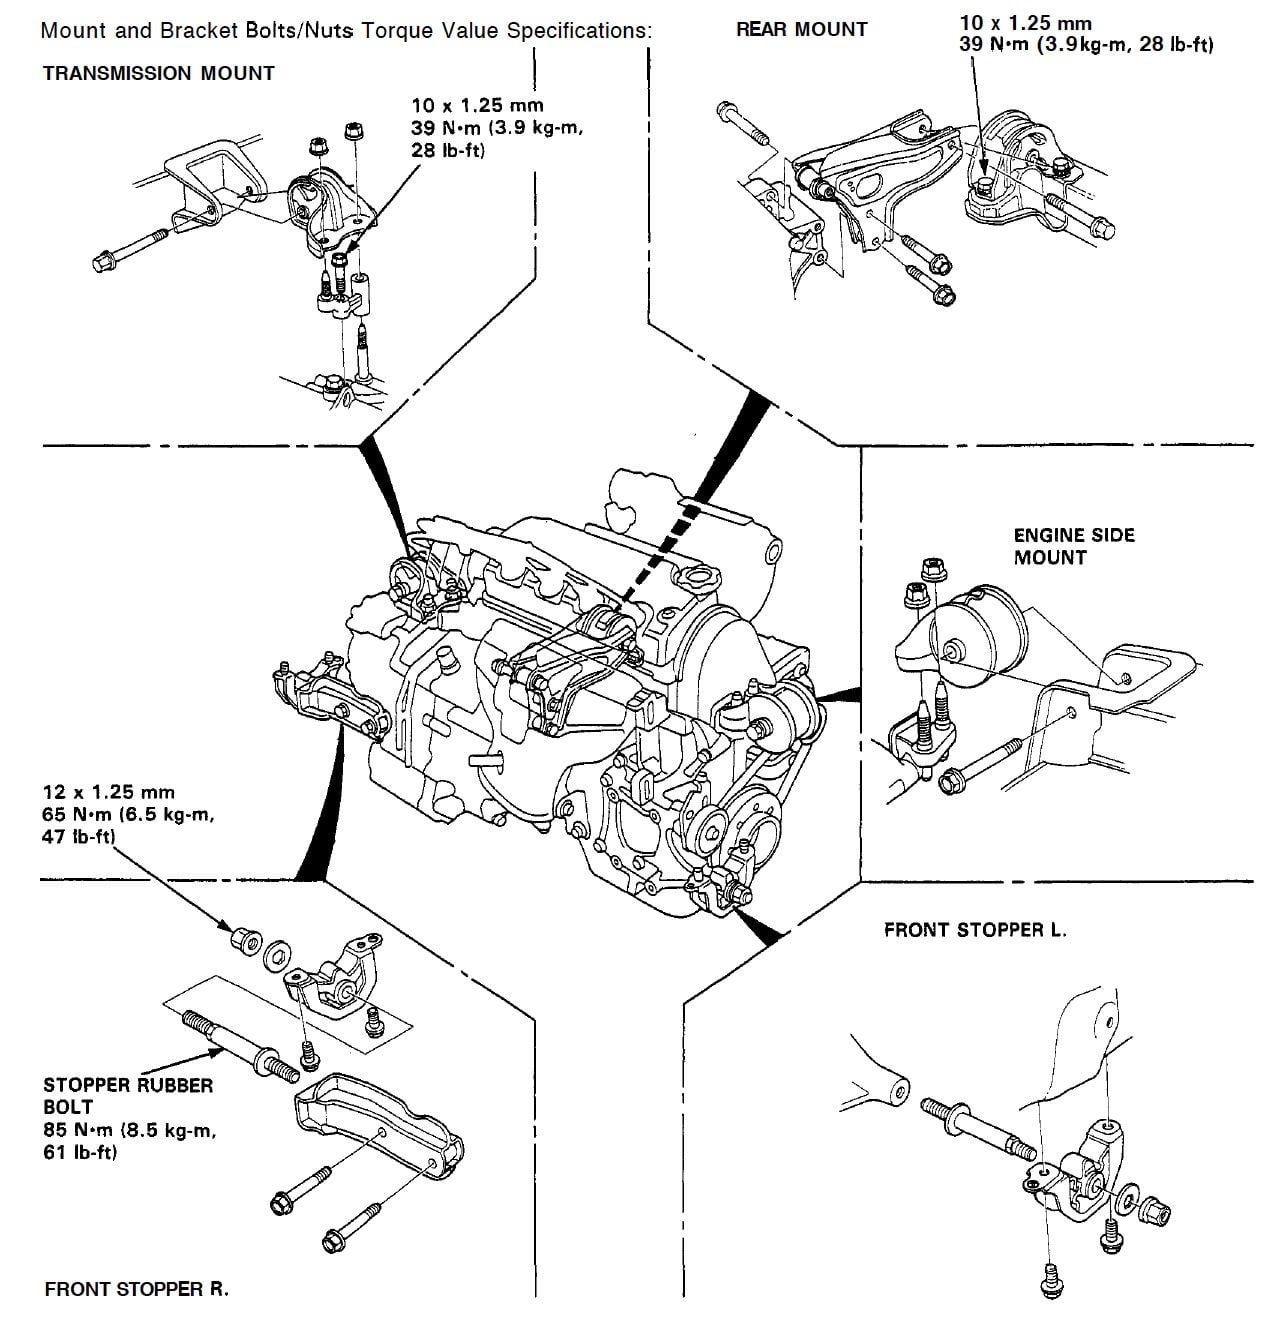 Wiring Diagram Info: 26 Honda Civic Engine Mount Diagram